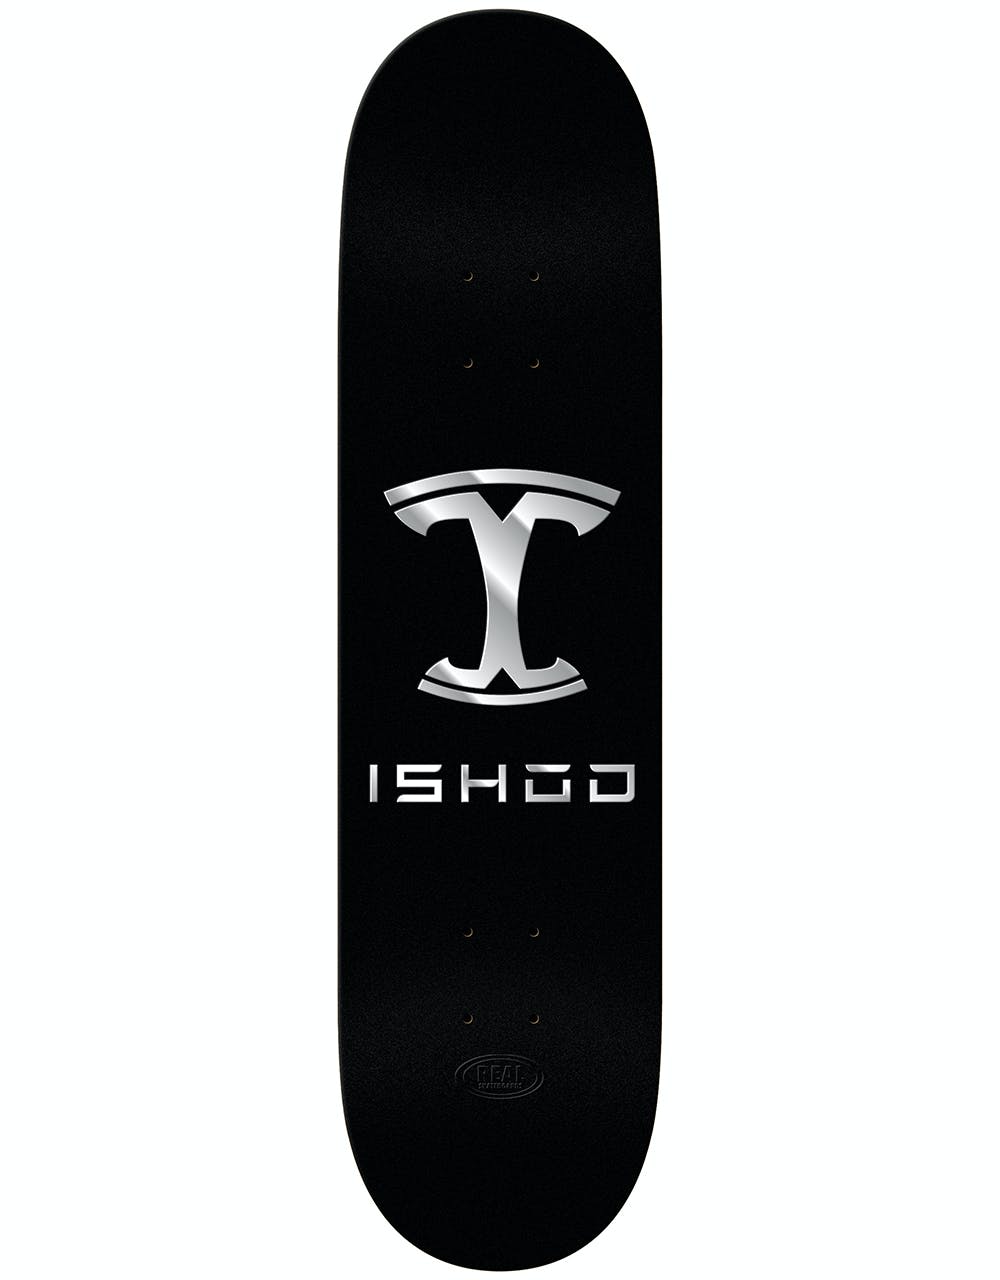 Real Ishod Model W Skateboard Deck - 8.06"